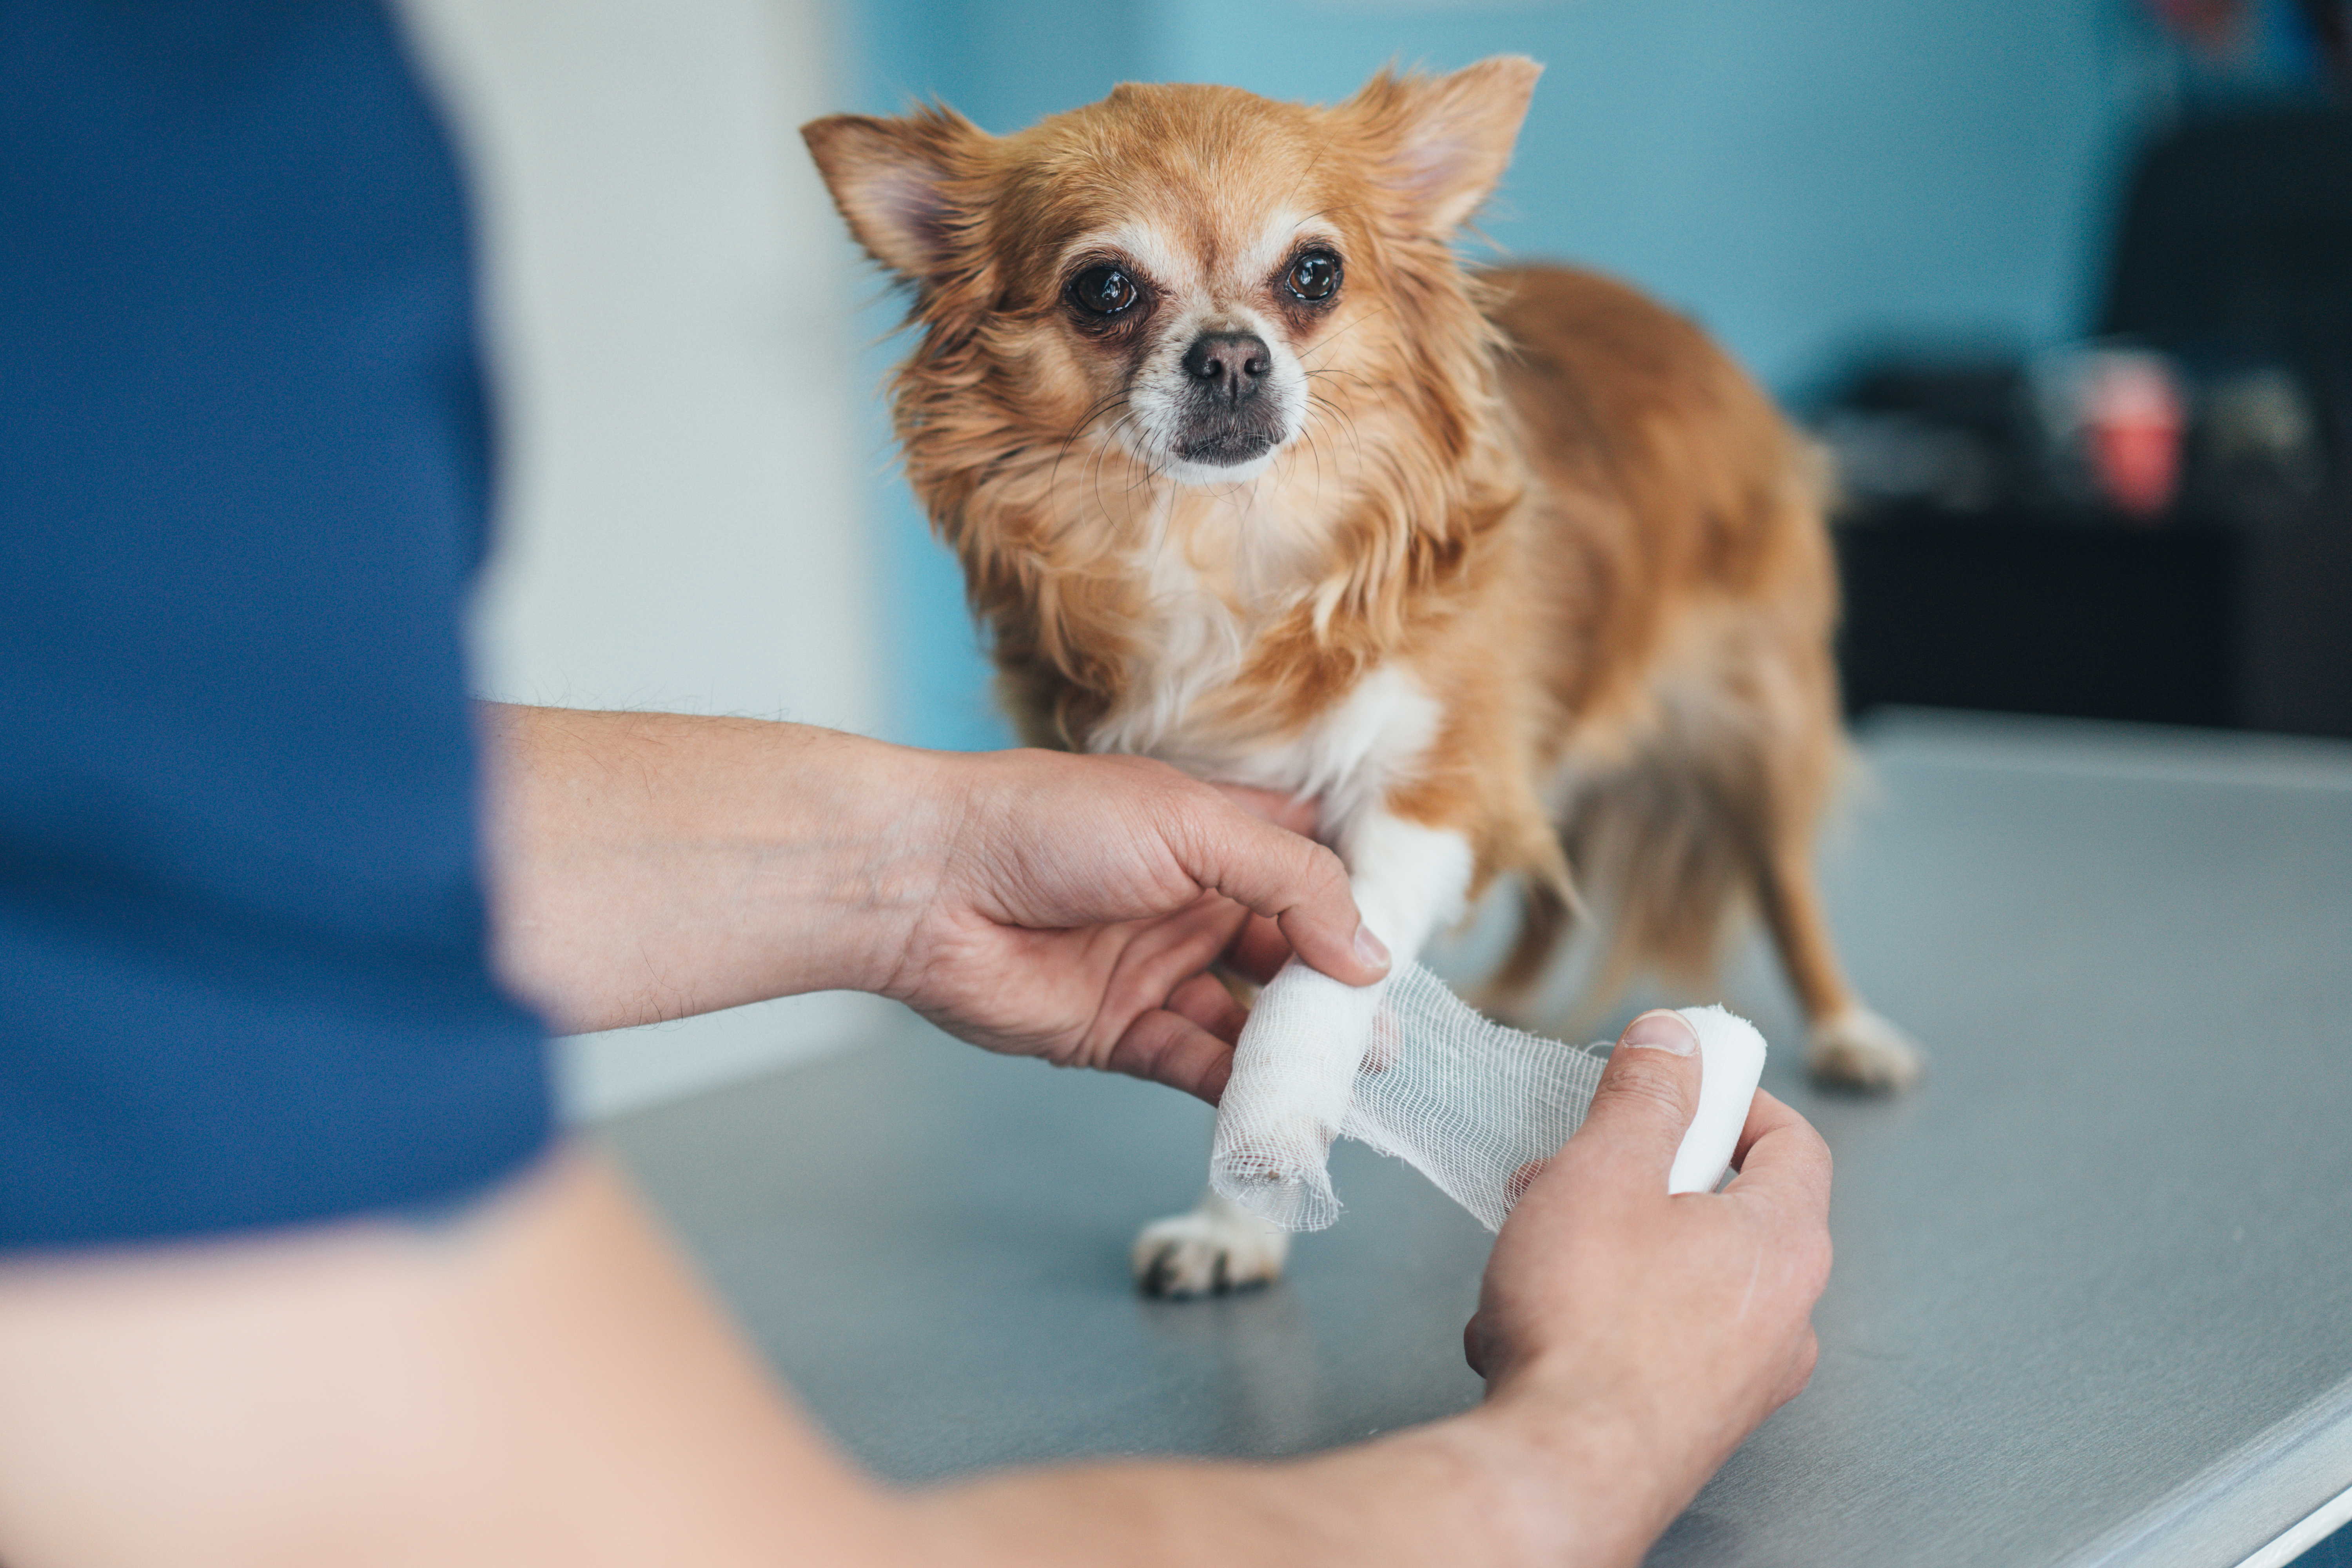 Vet wrapping bandage around a Chihuahua's injured leg